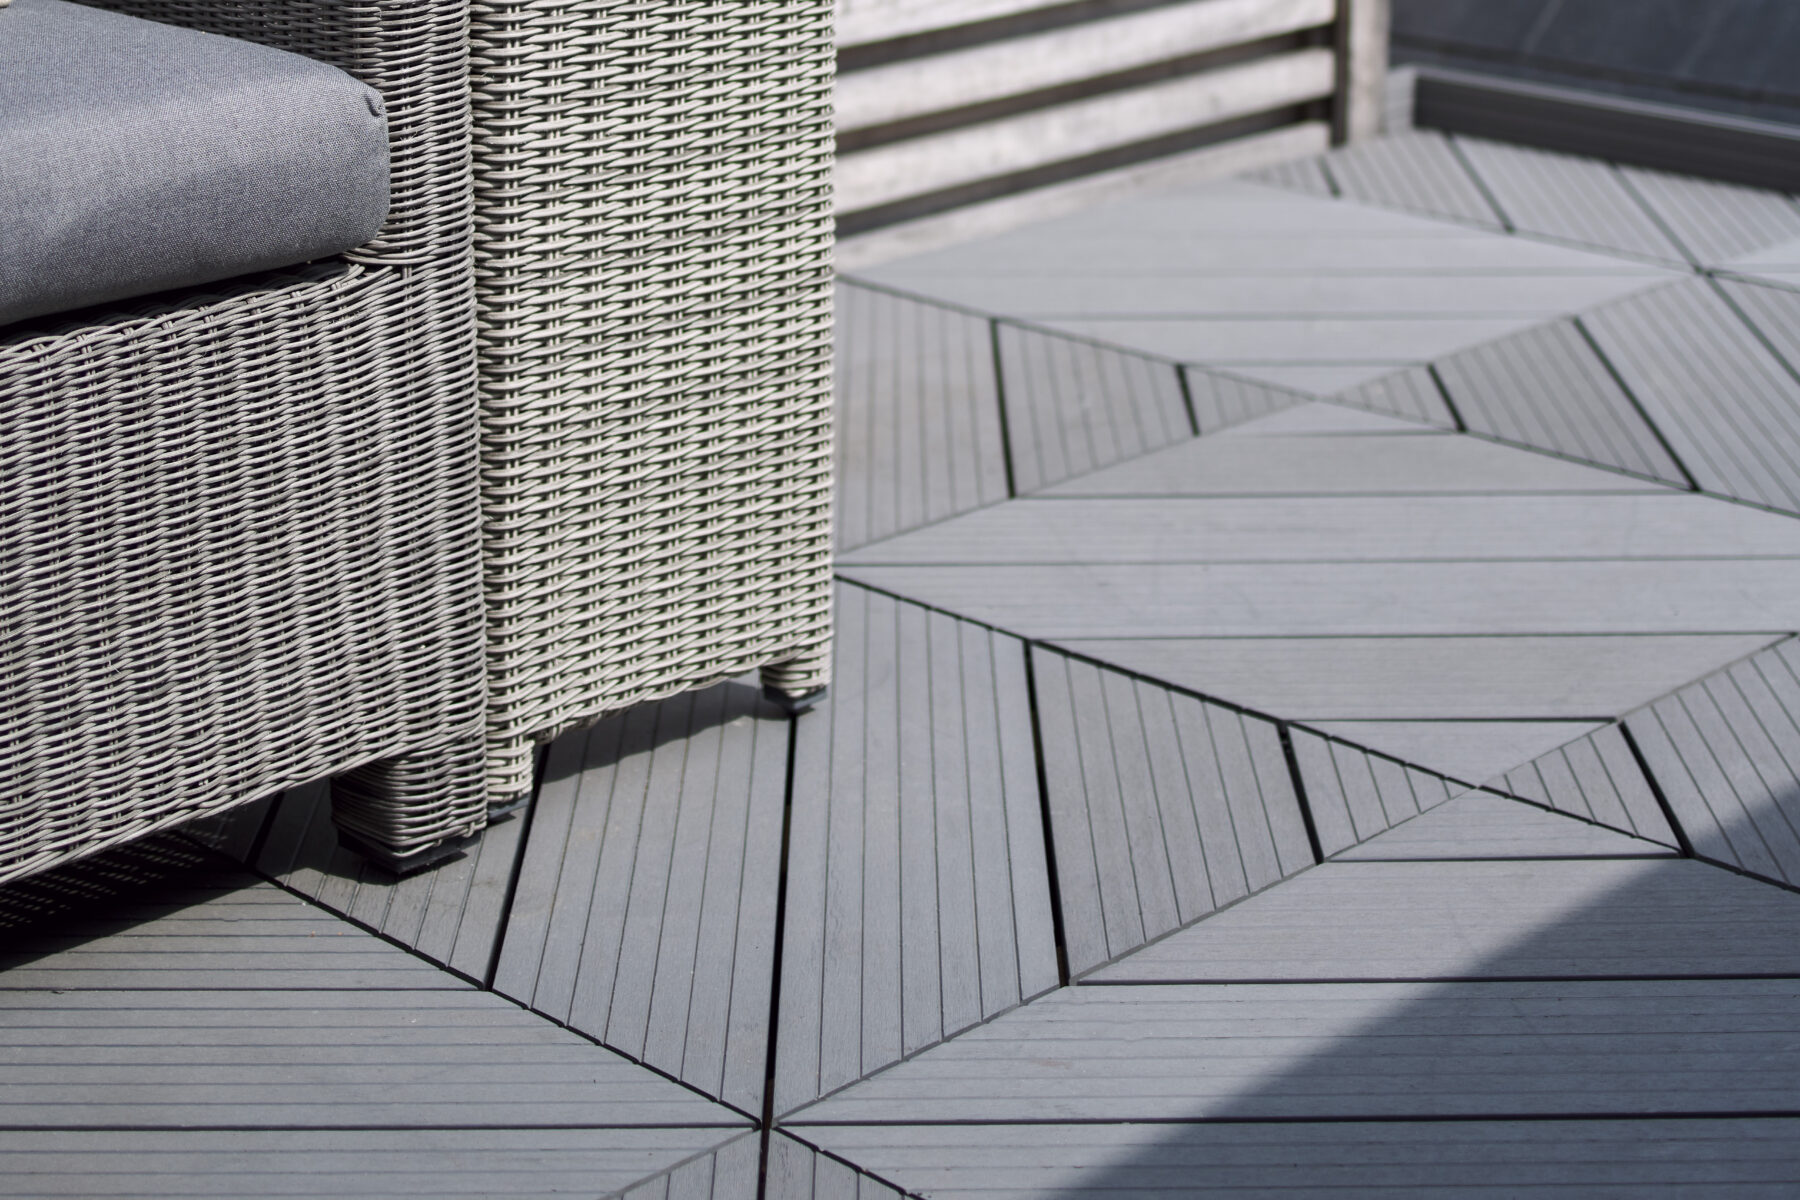 Composite Prime roof terrace decking